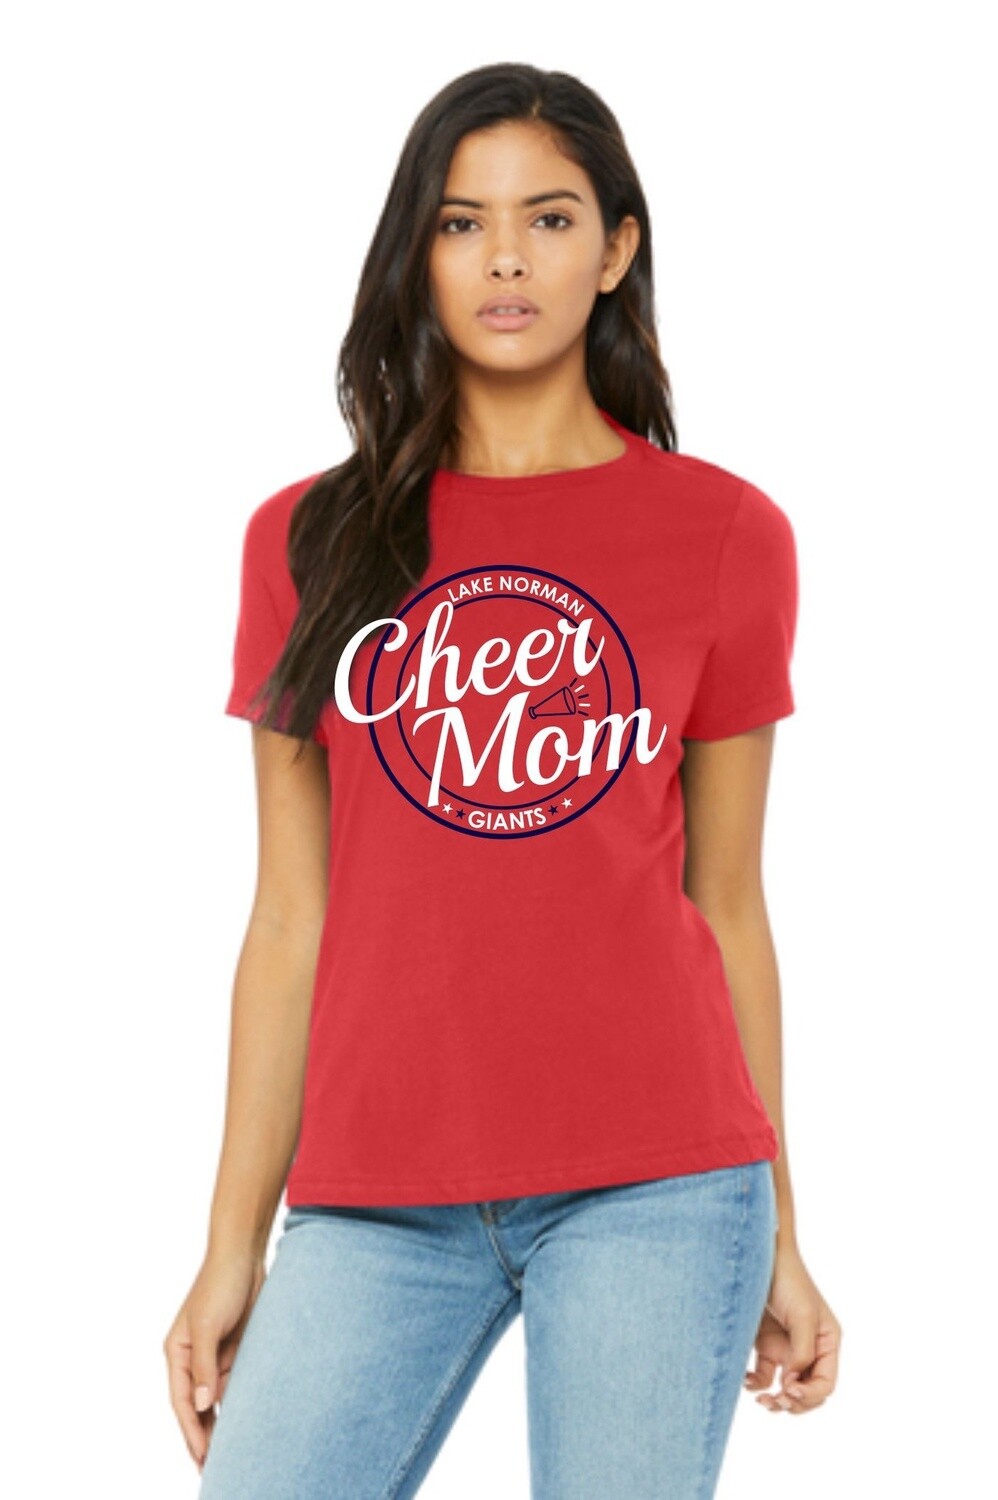 "Cheer Mom" Women's Bella Canvas Tri-Blend Tee